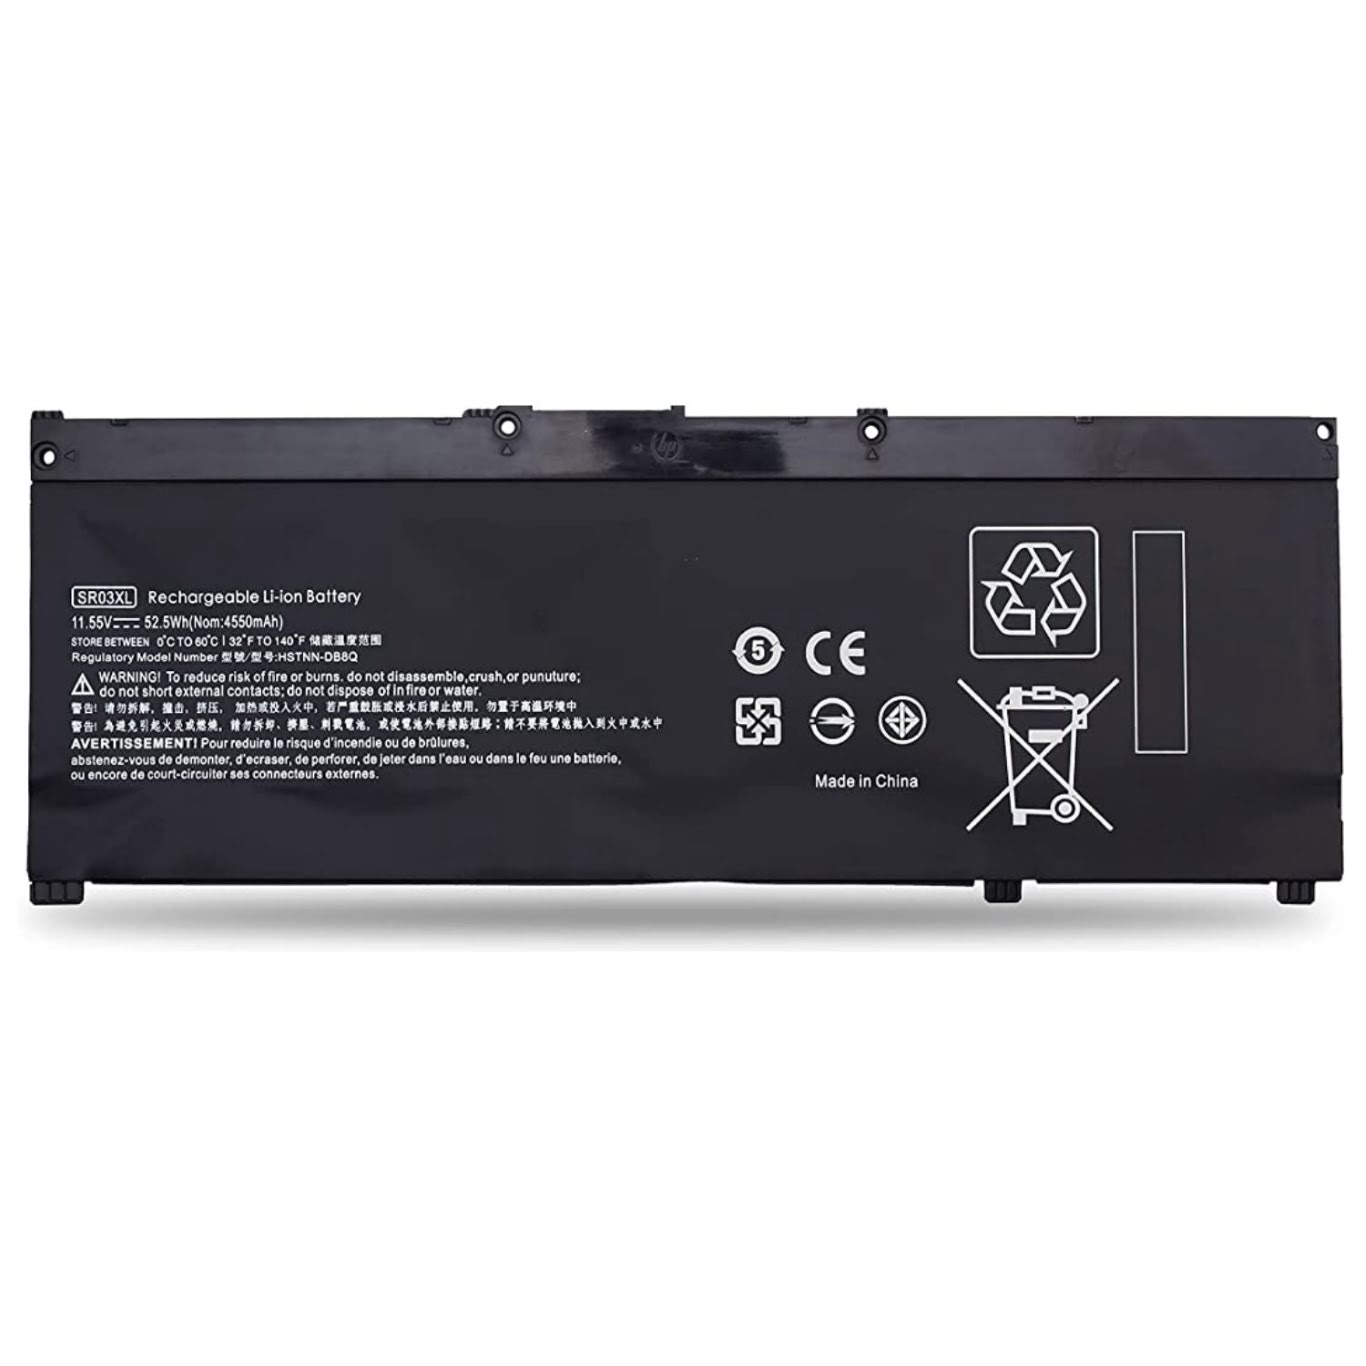 HSTNN-DB8Q, L08855-855 replacement Laptop Battery for HP 15-cx0058TX, 15-CX0058WM, 11.55v, 52.5wh